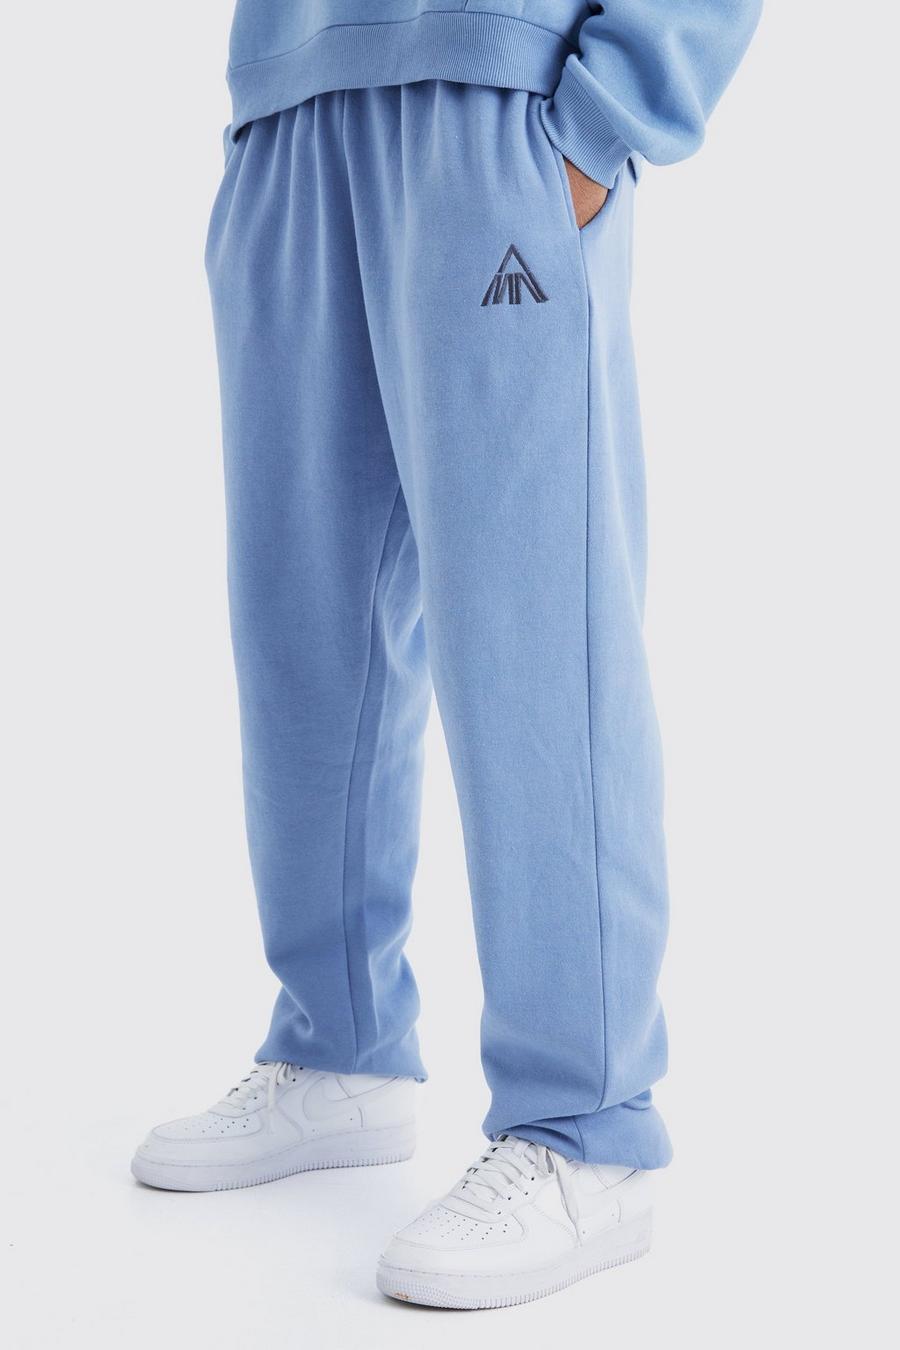 Pantaloni tuta Tall Man oversize Basic, Dusty blue